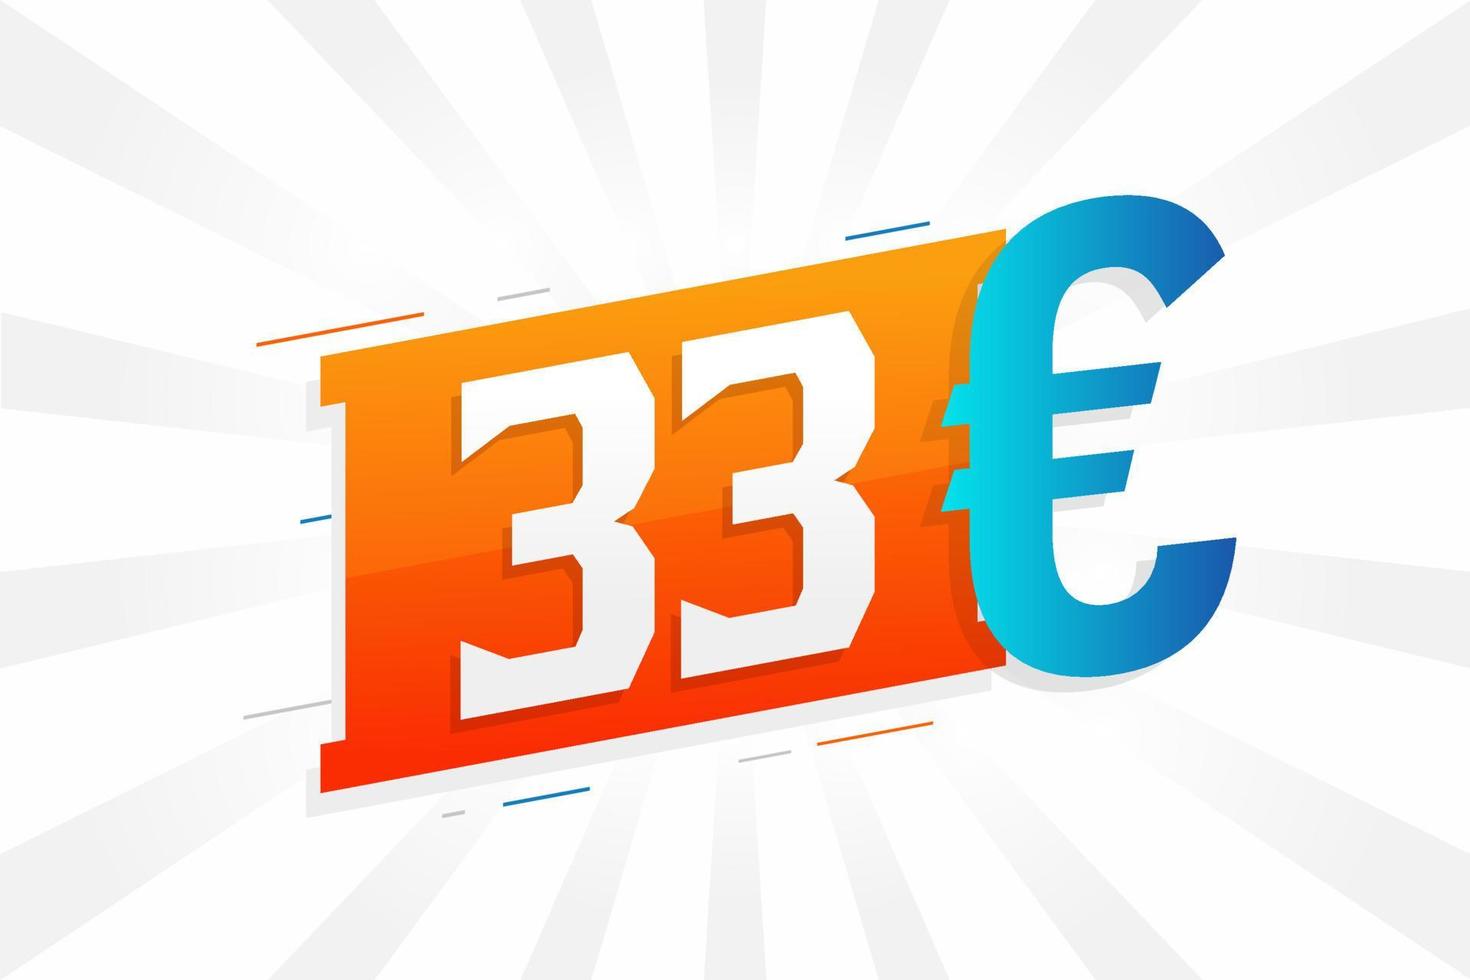 33 euro valuta vektor text symbol. 33 euro europeisk union pengar stock vektor